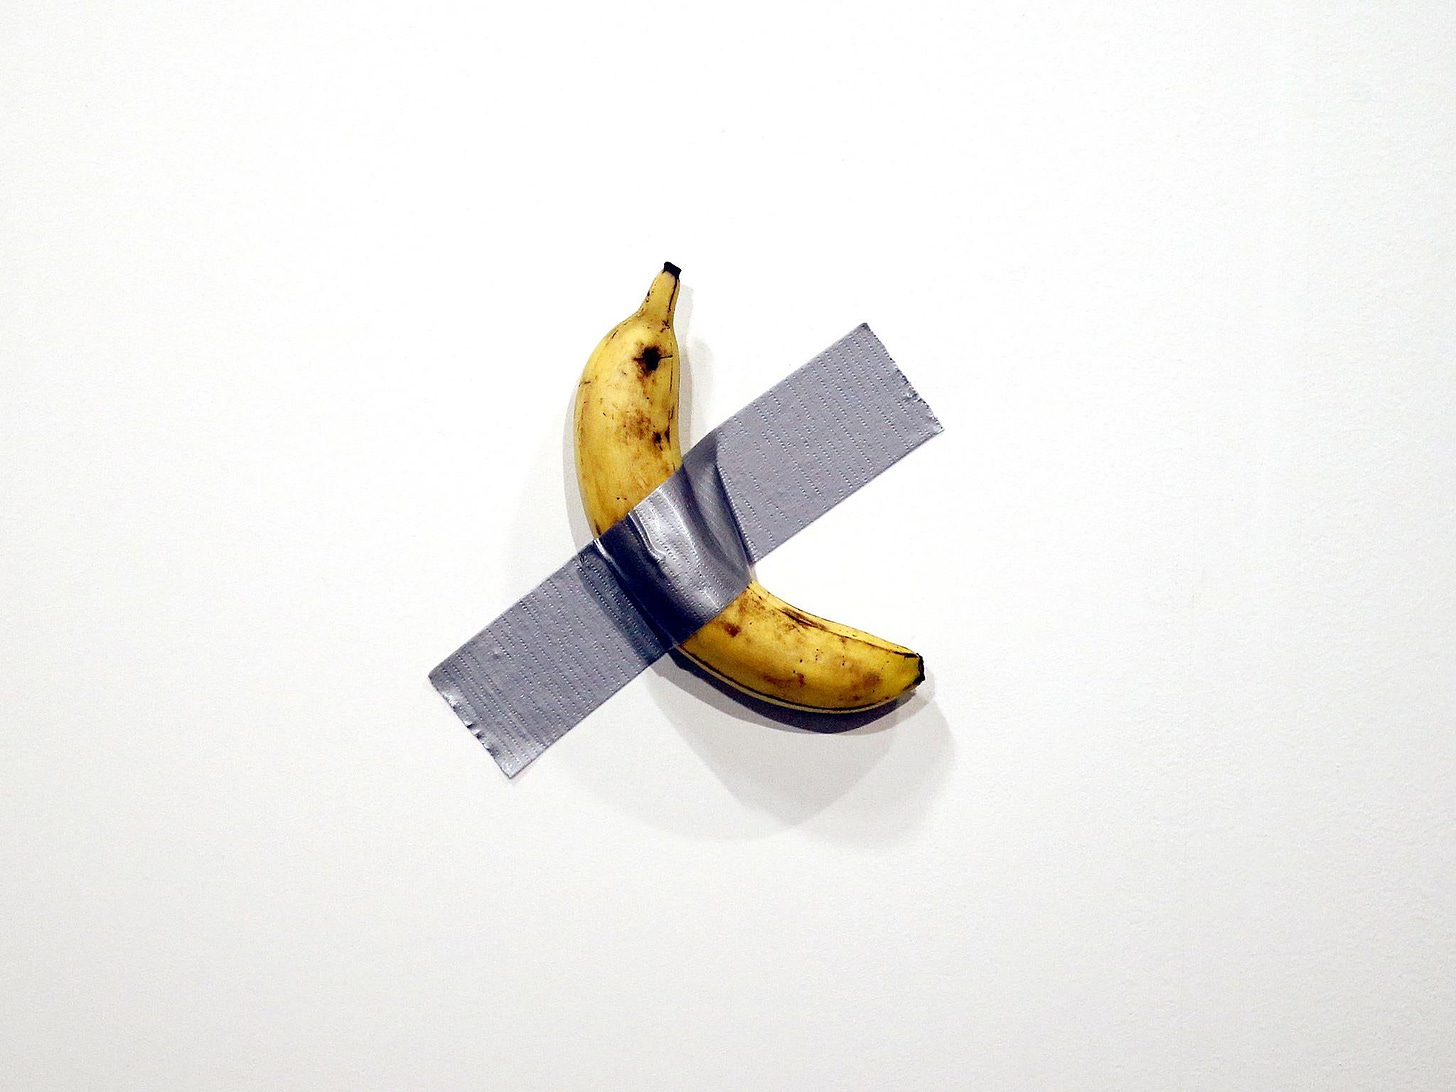 The art world's great 'Banana' moment won't change a thing ...